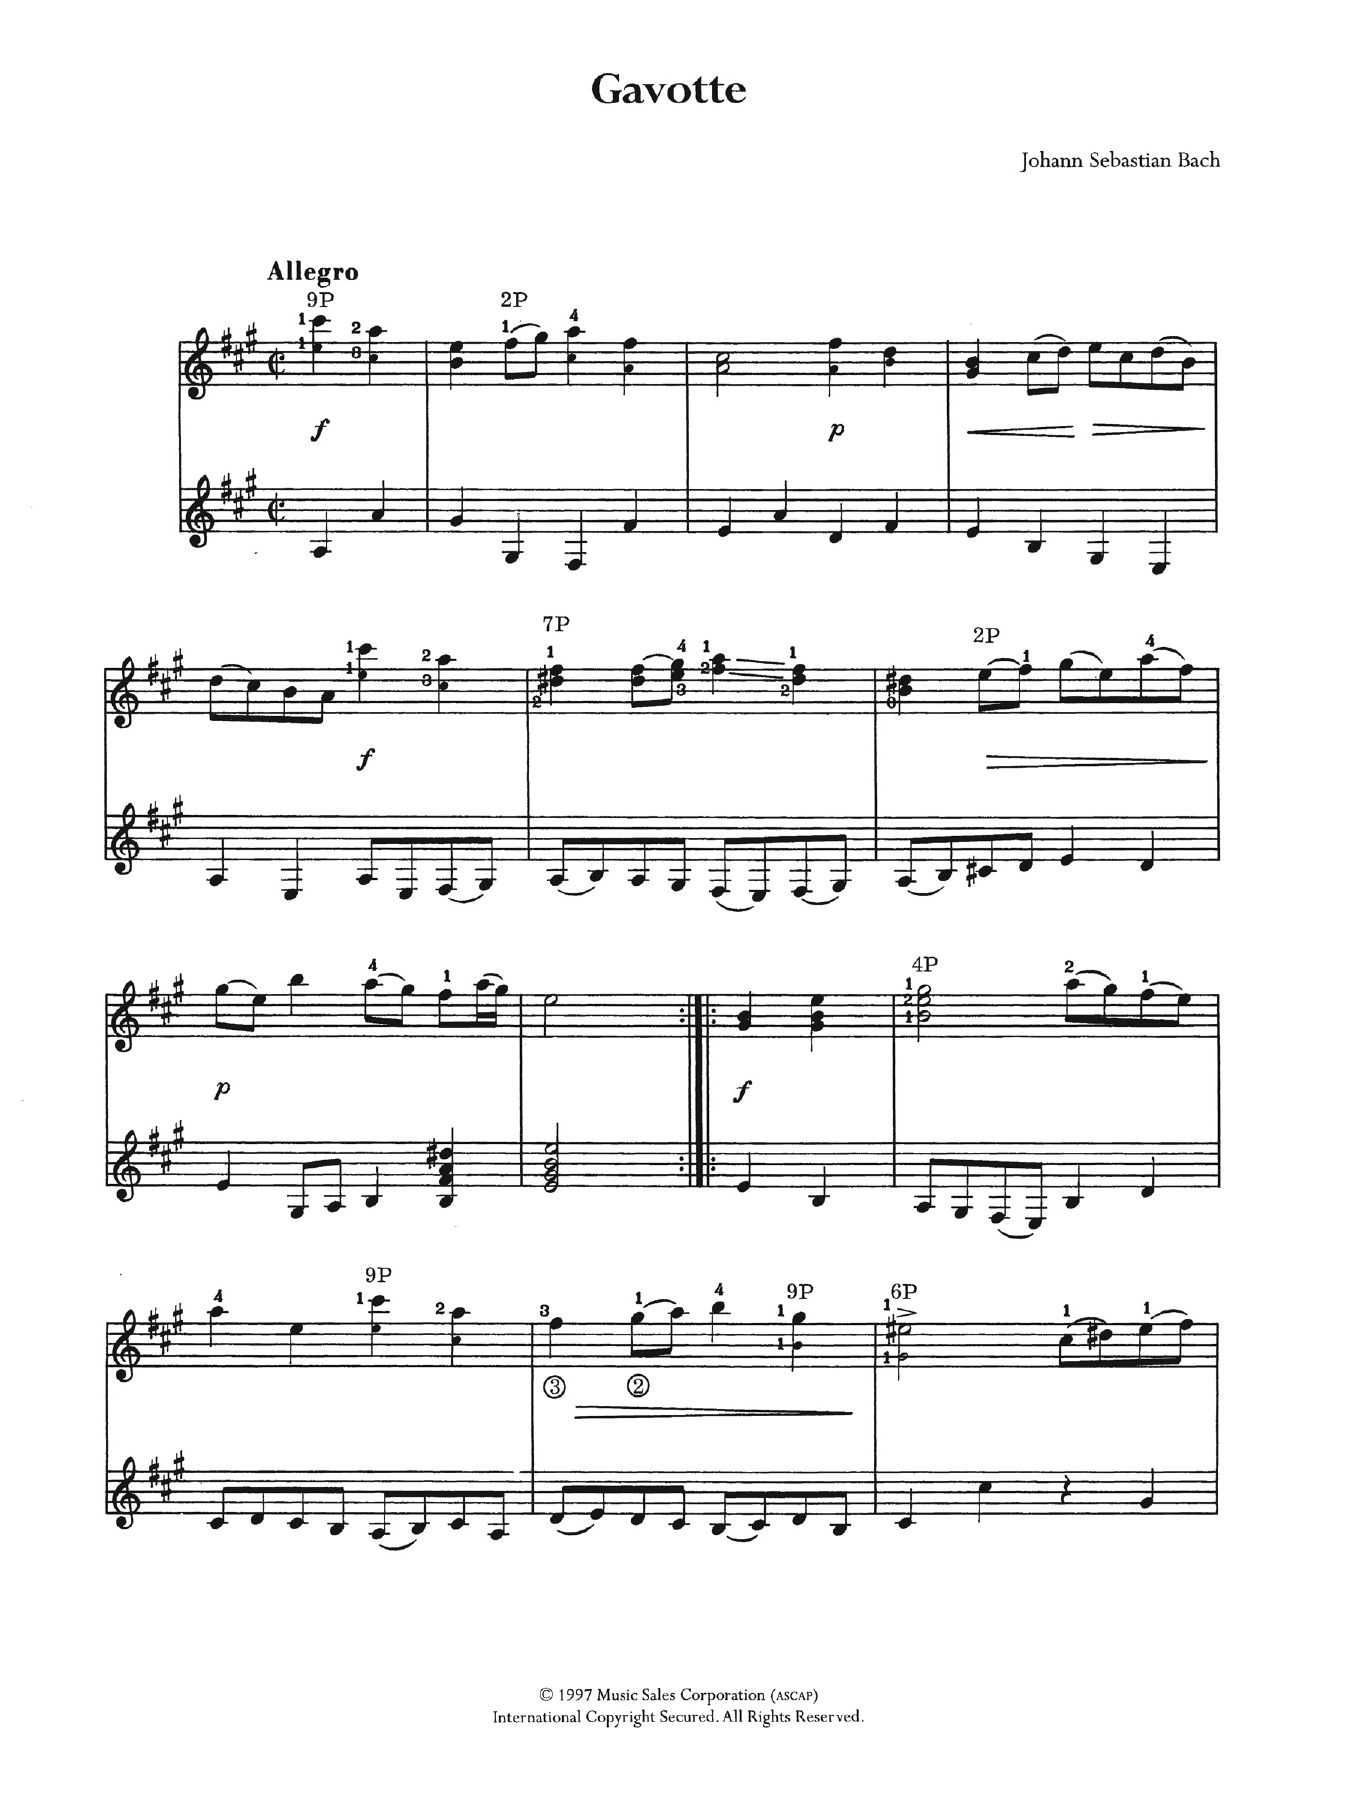 Download Johann Sebastian Bach Gavotte (from French Suite No. 5) Sheet Music